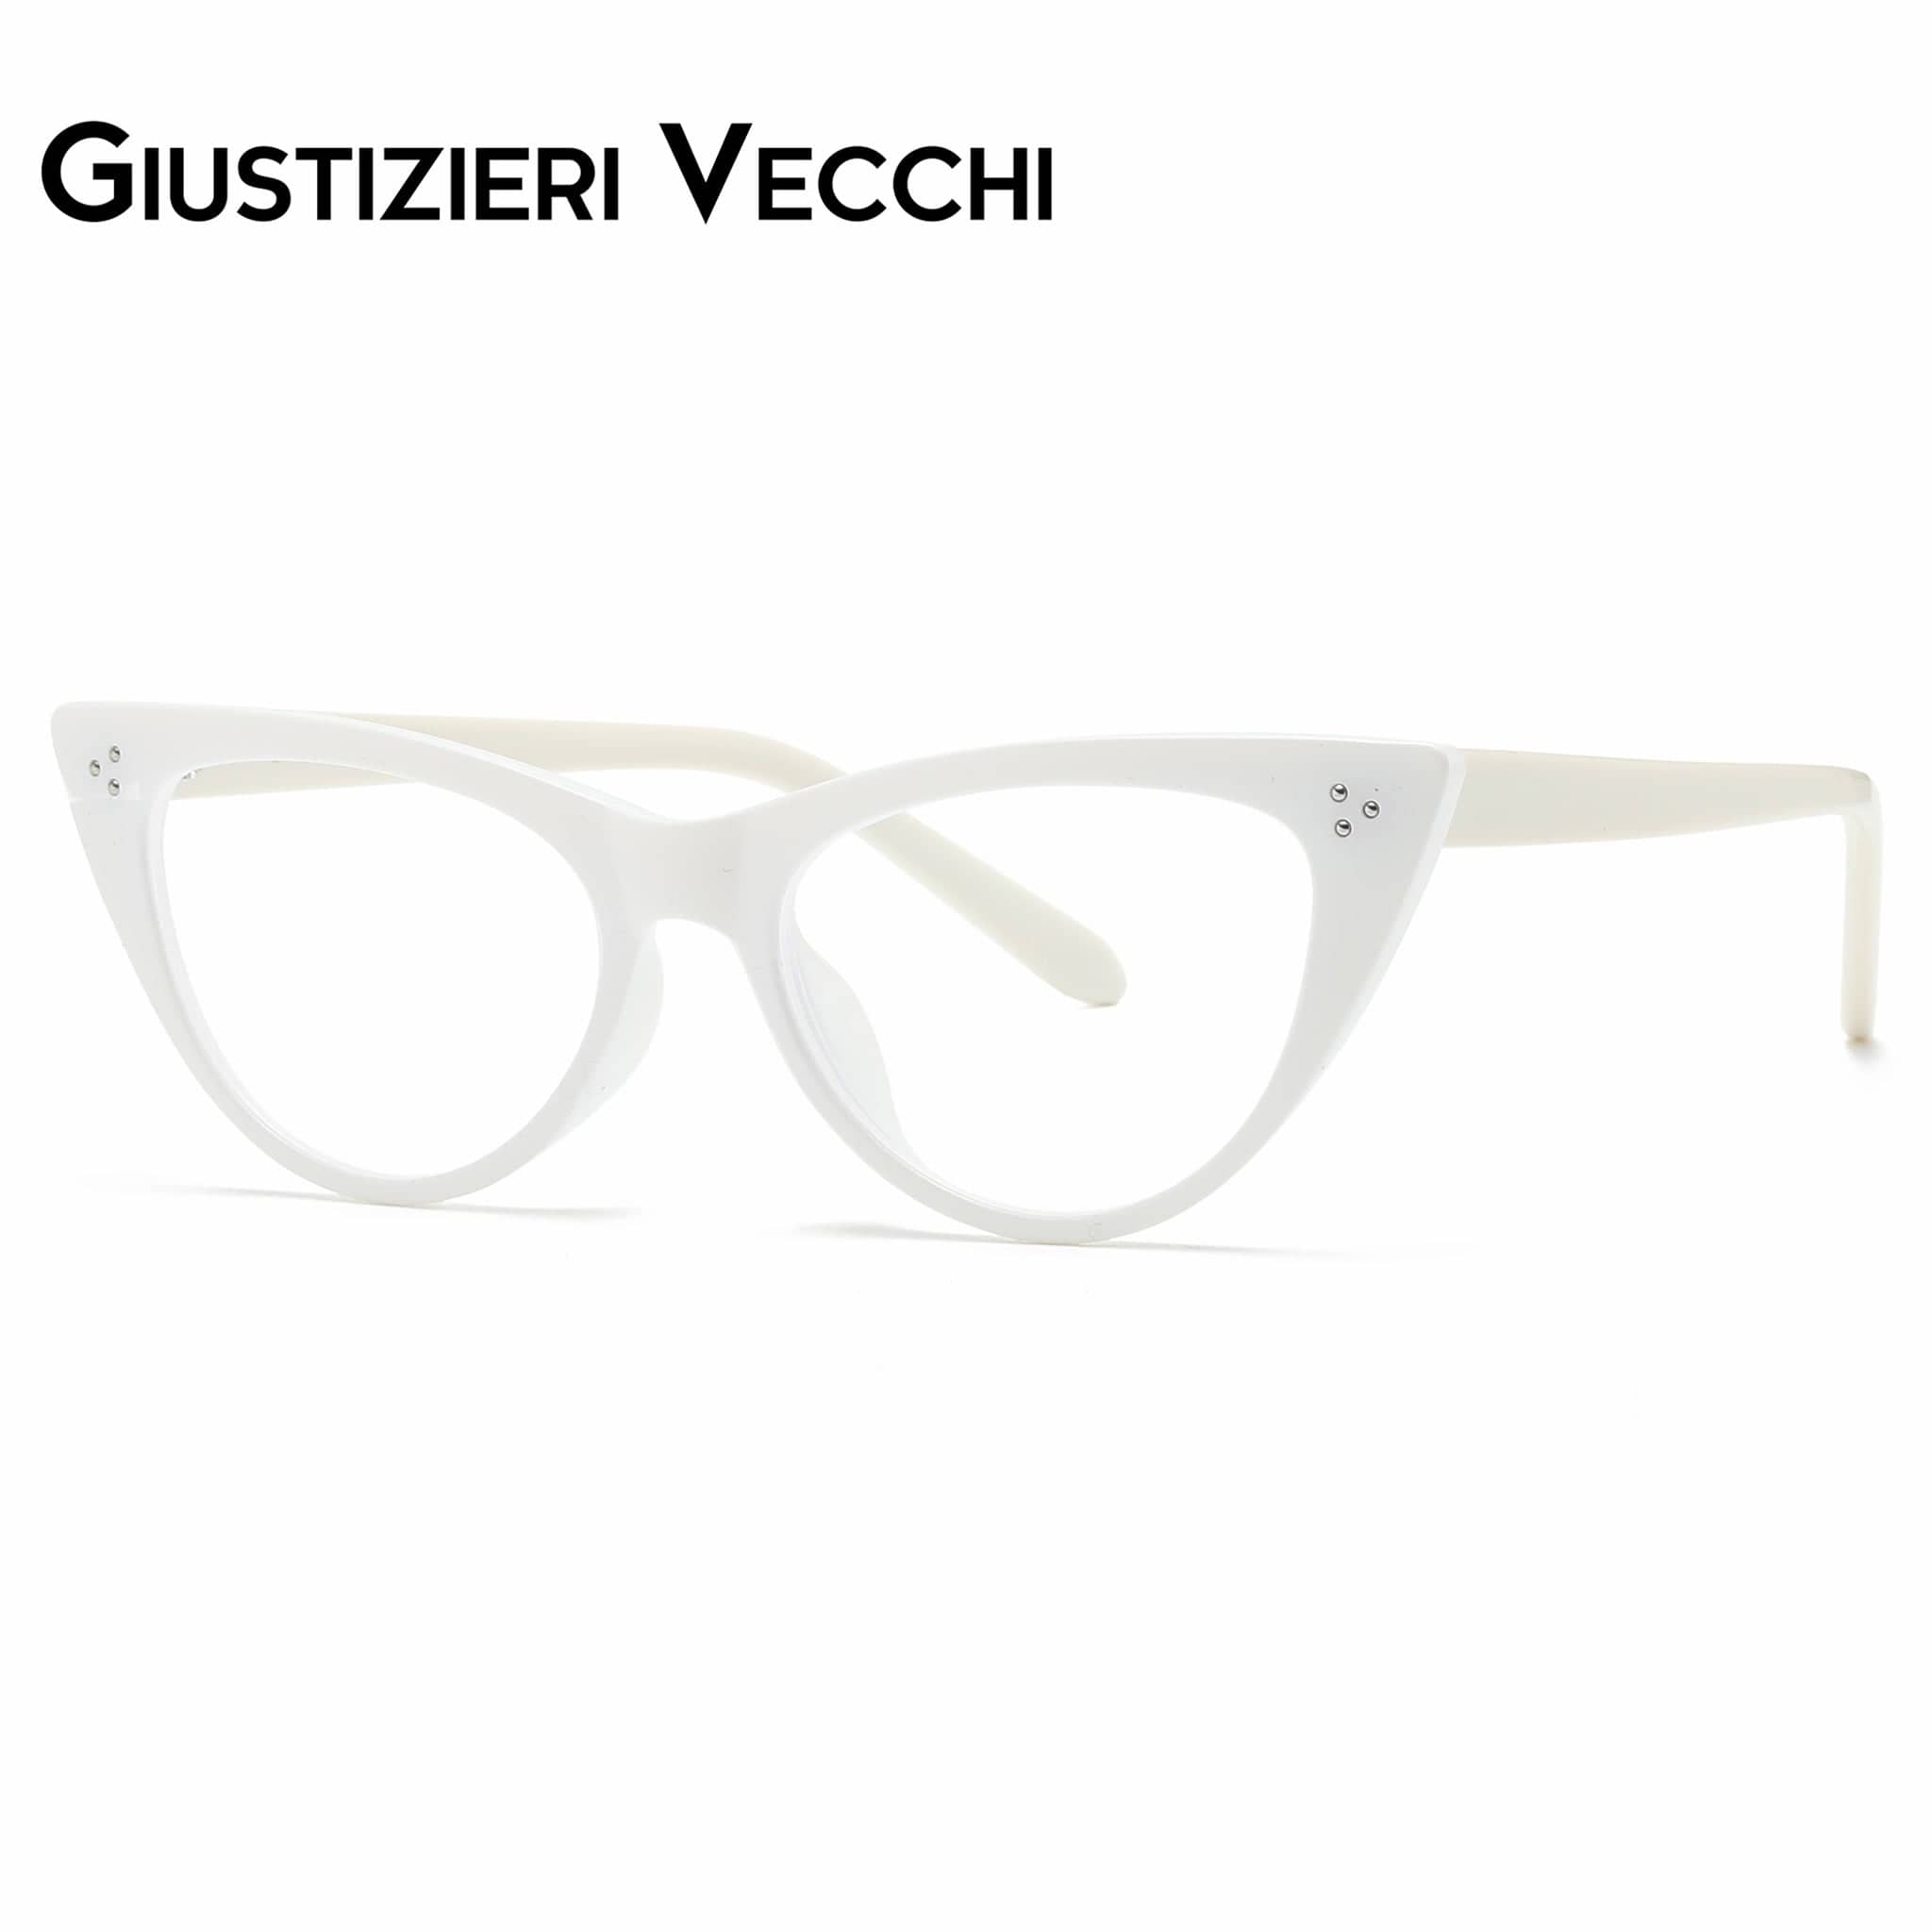 GIUSTIZIERI VECCHI Eyeglasses RoyalGlamour Duo